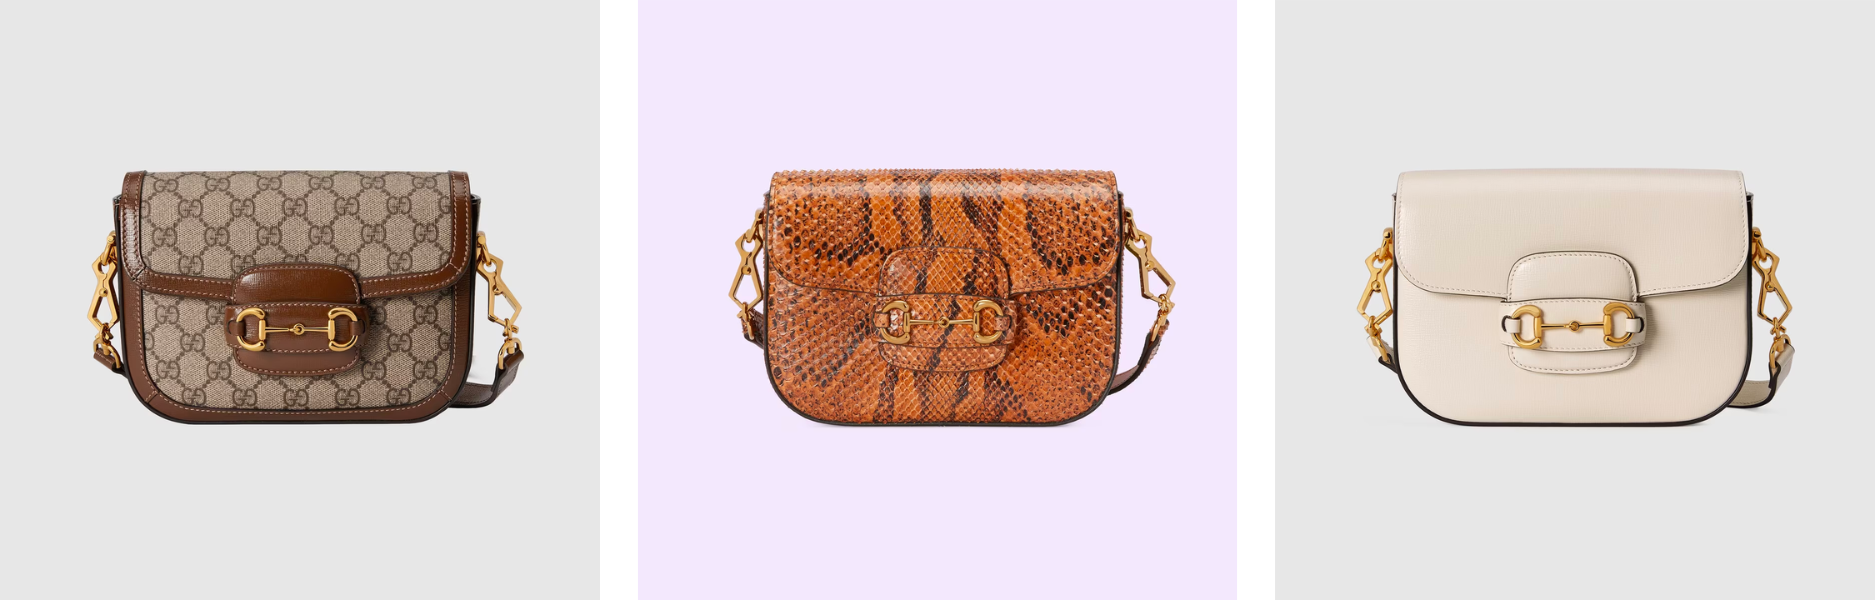 Gucci Horsebit 1955 mini python bag in brown